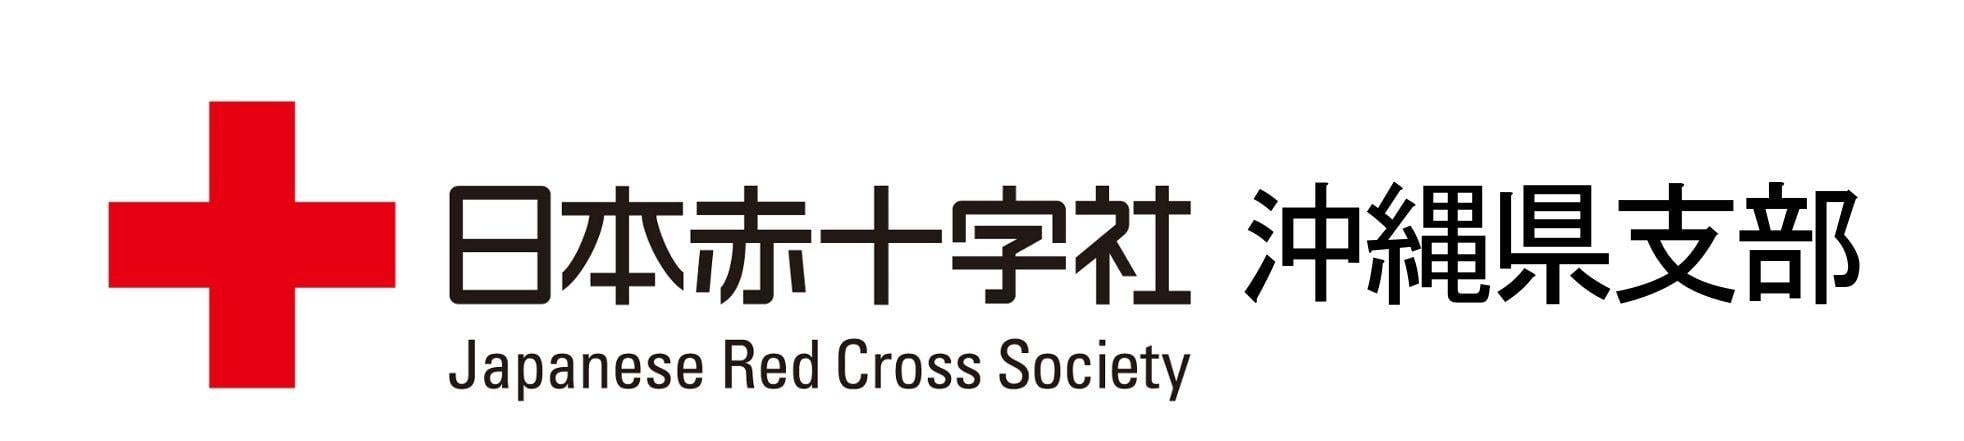 Red Cross Society Logo - Japanese Red Cross Society logo